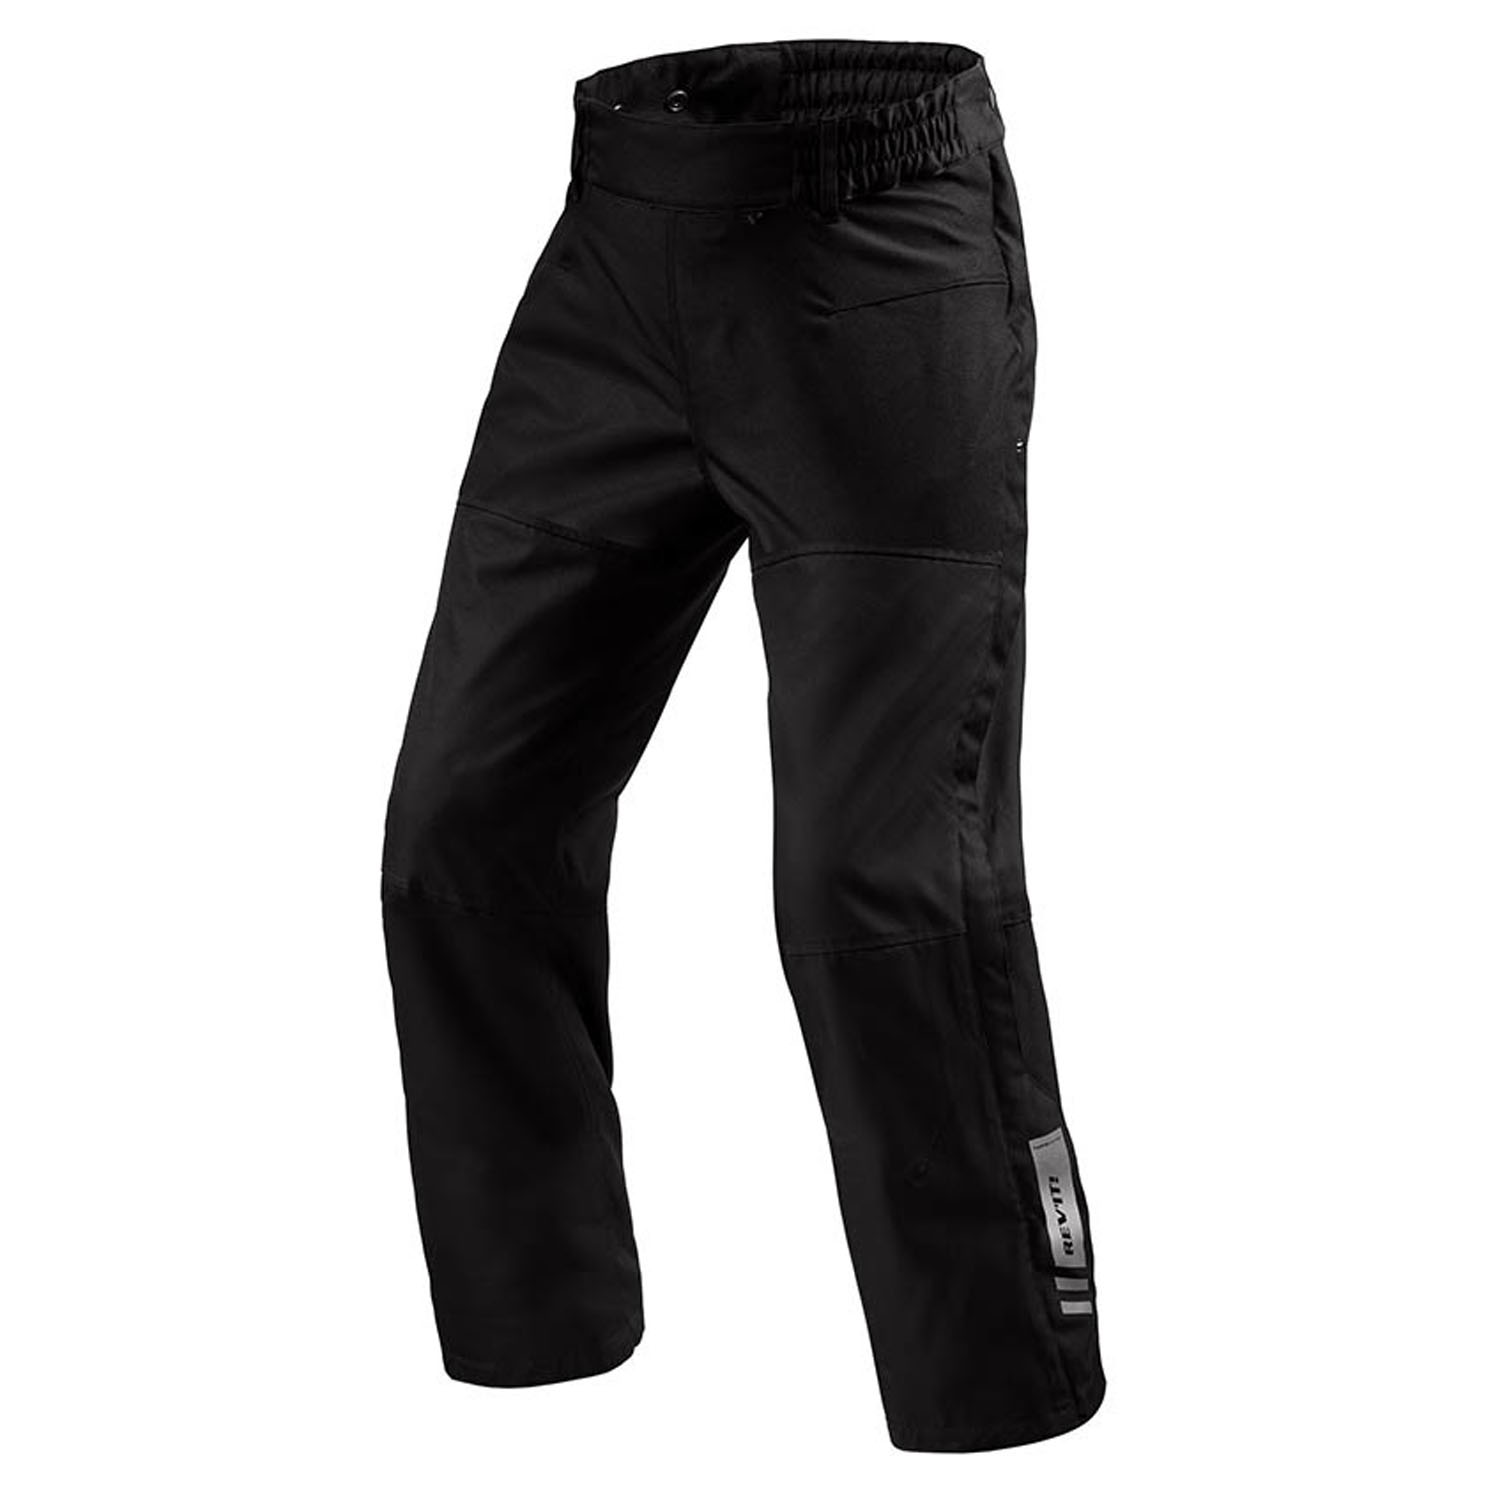 Image of REV'IT! Pants Axis 2 H2O Black Long Motorcycle Pants Size L ID 8700001350792